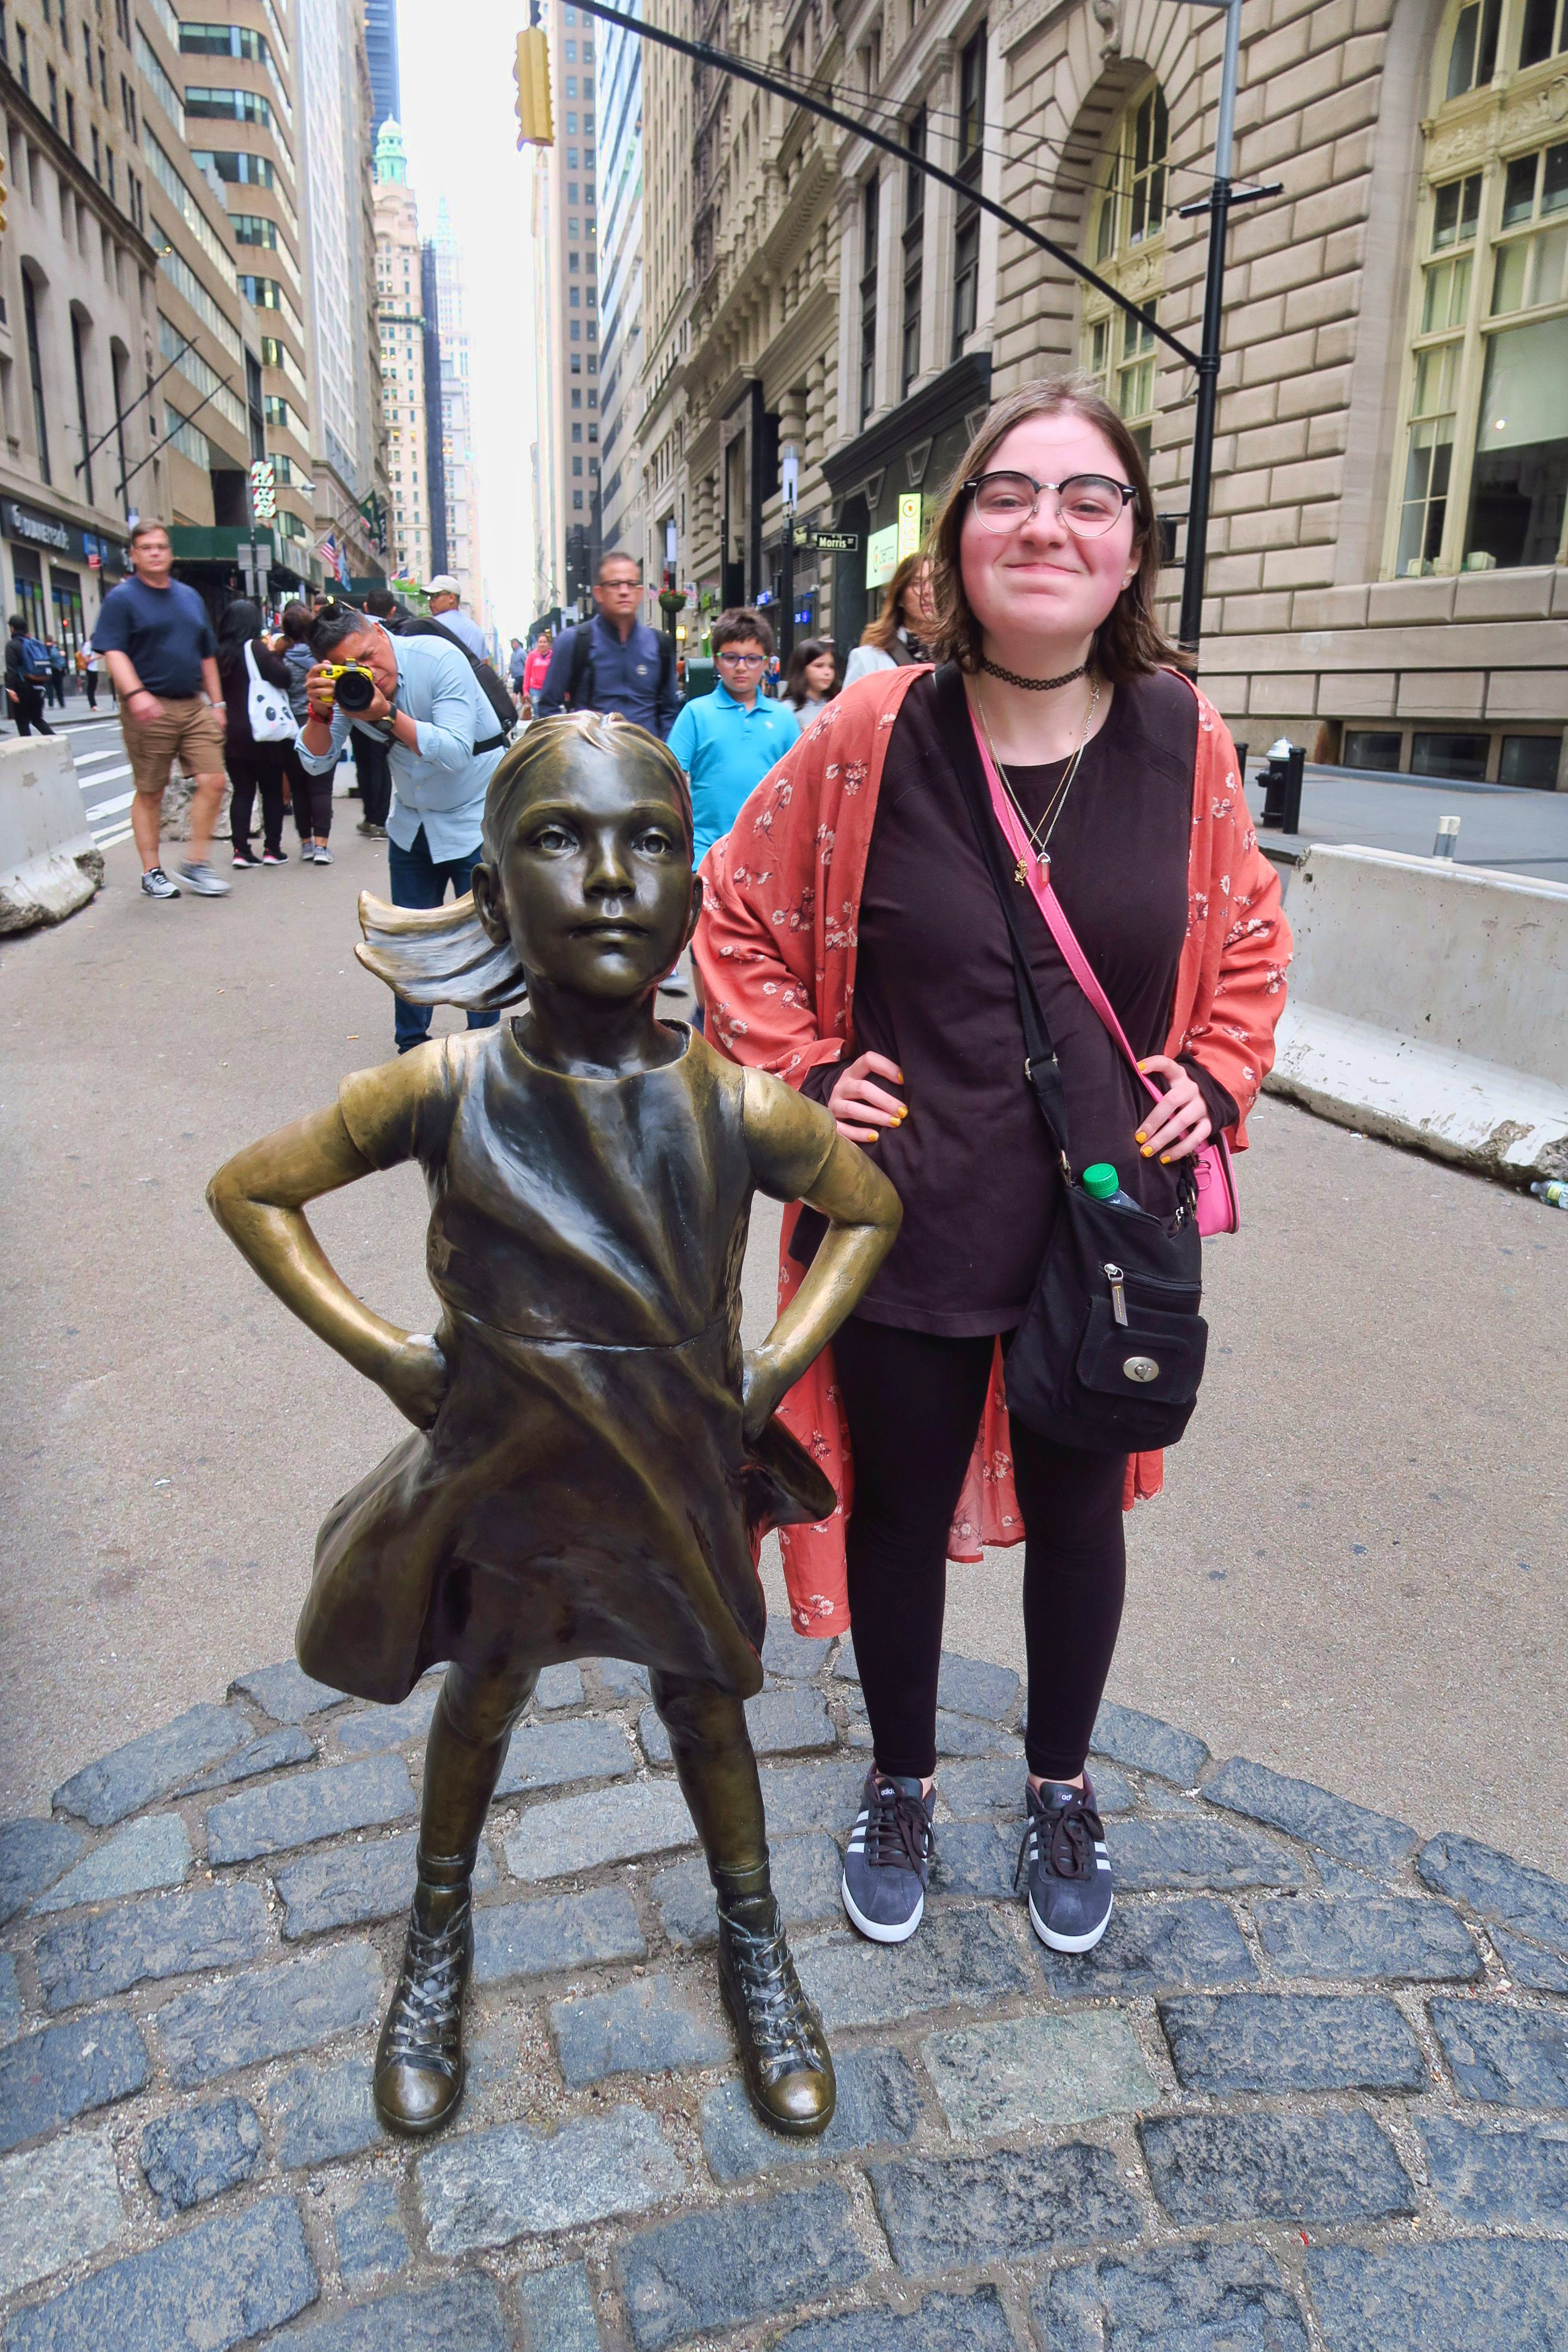 My fearless girl beside Wall Street's bronze "Fearless Girl."